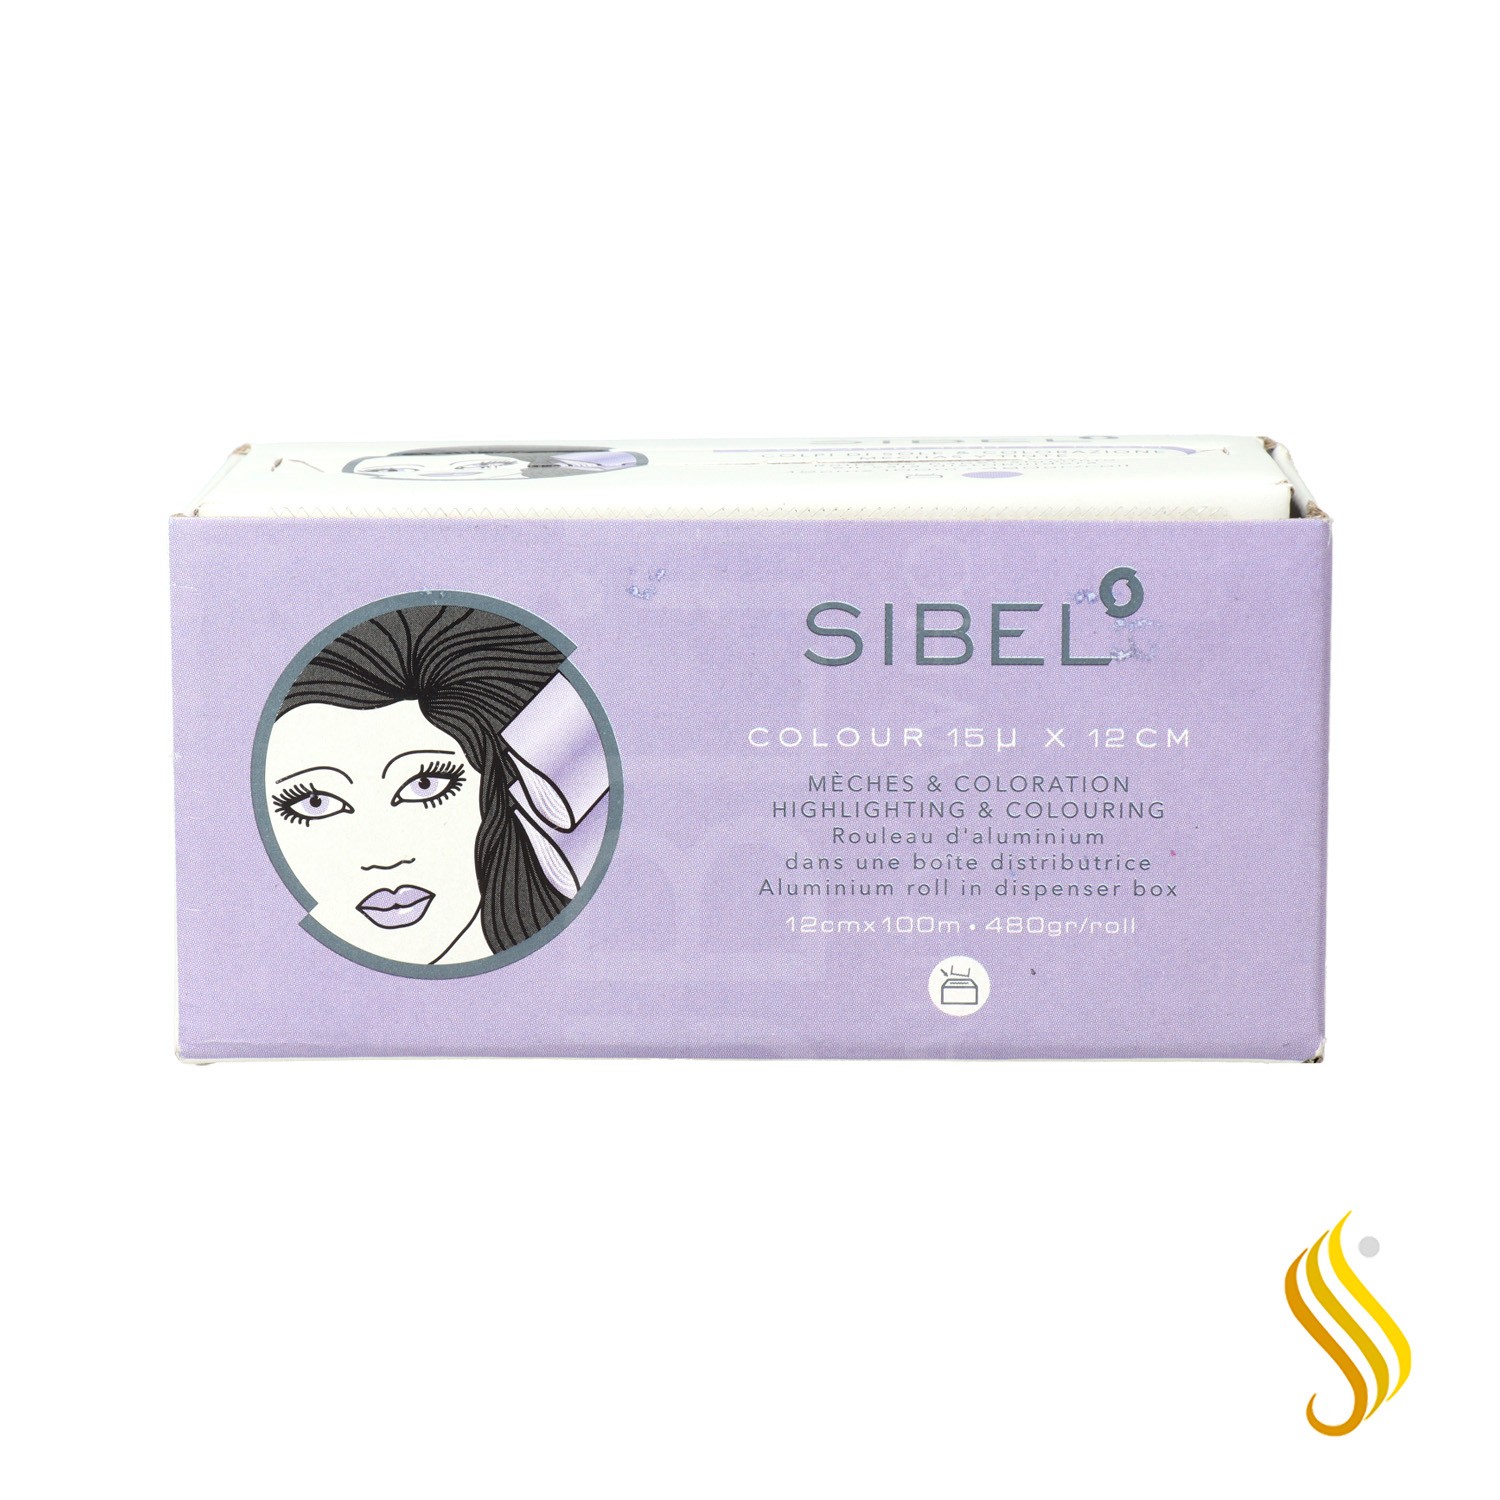 Sinelco Sibel High Light Lilac Aluminum Foil 15 X 12 X 100